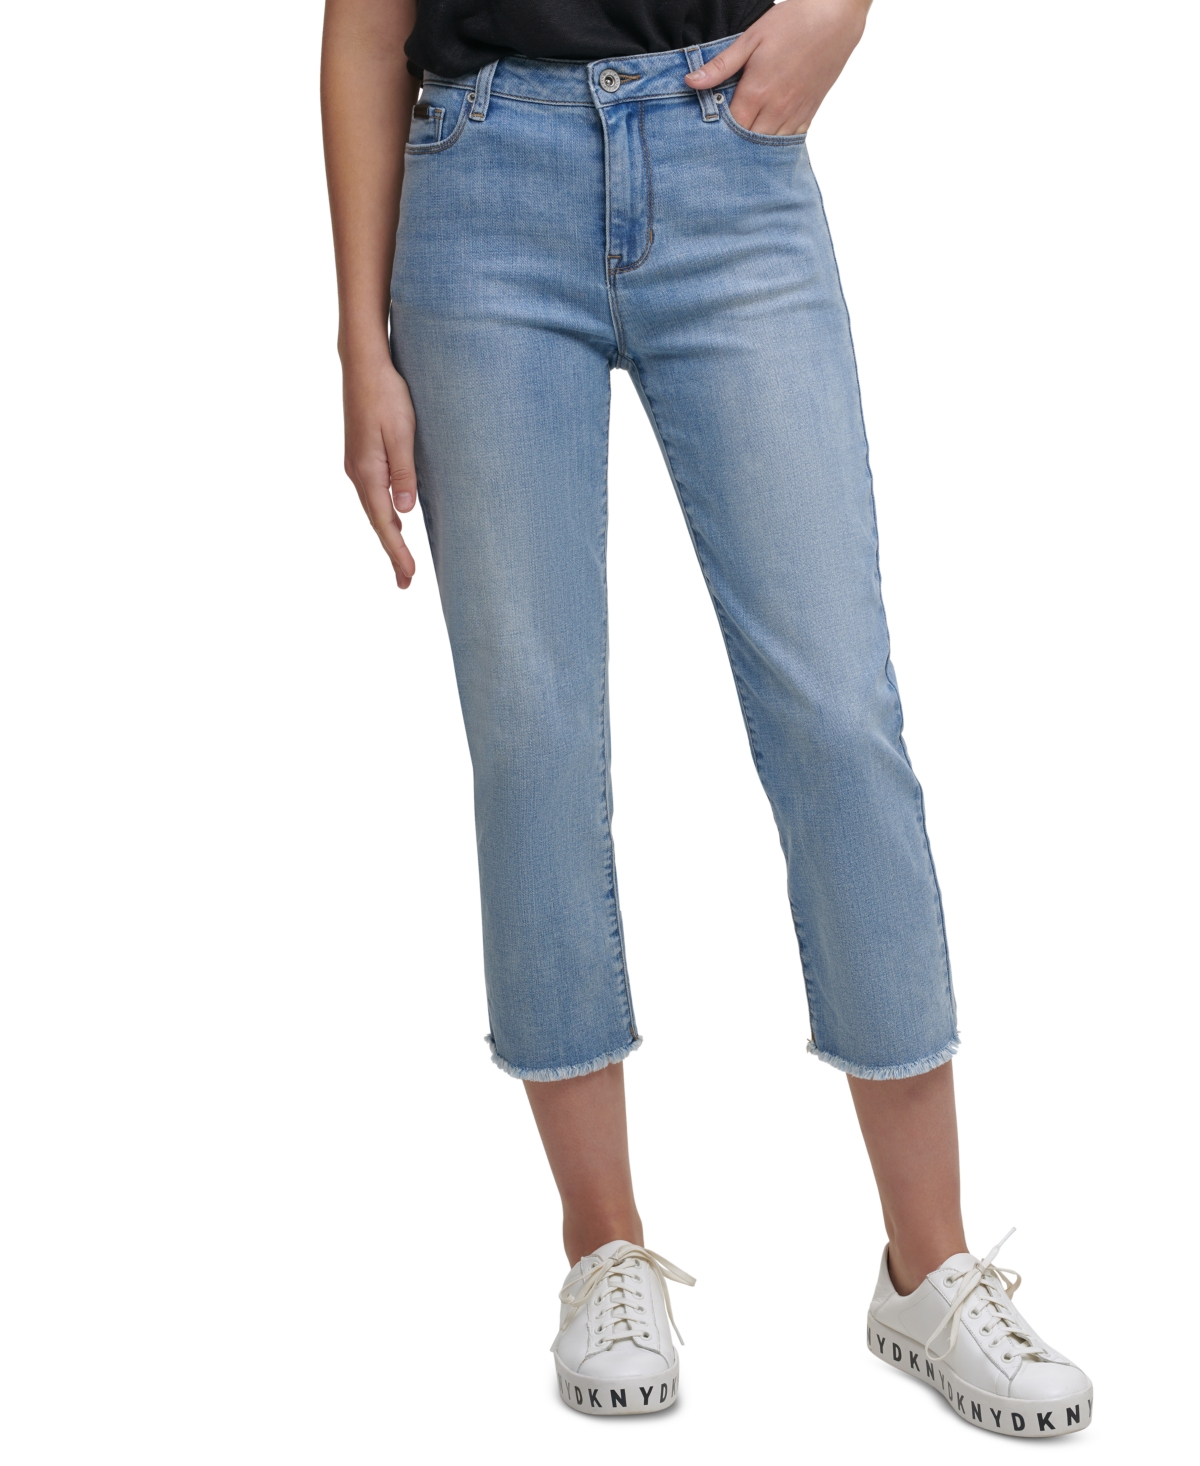  Dkny Jeans Rivington Slim Straight Cropped Raw-Hem Jeans